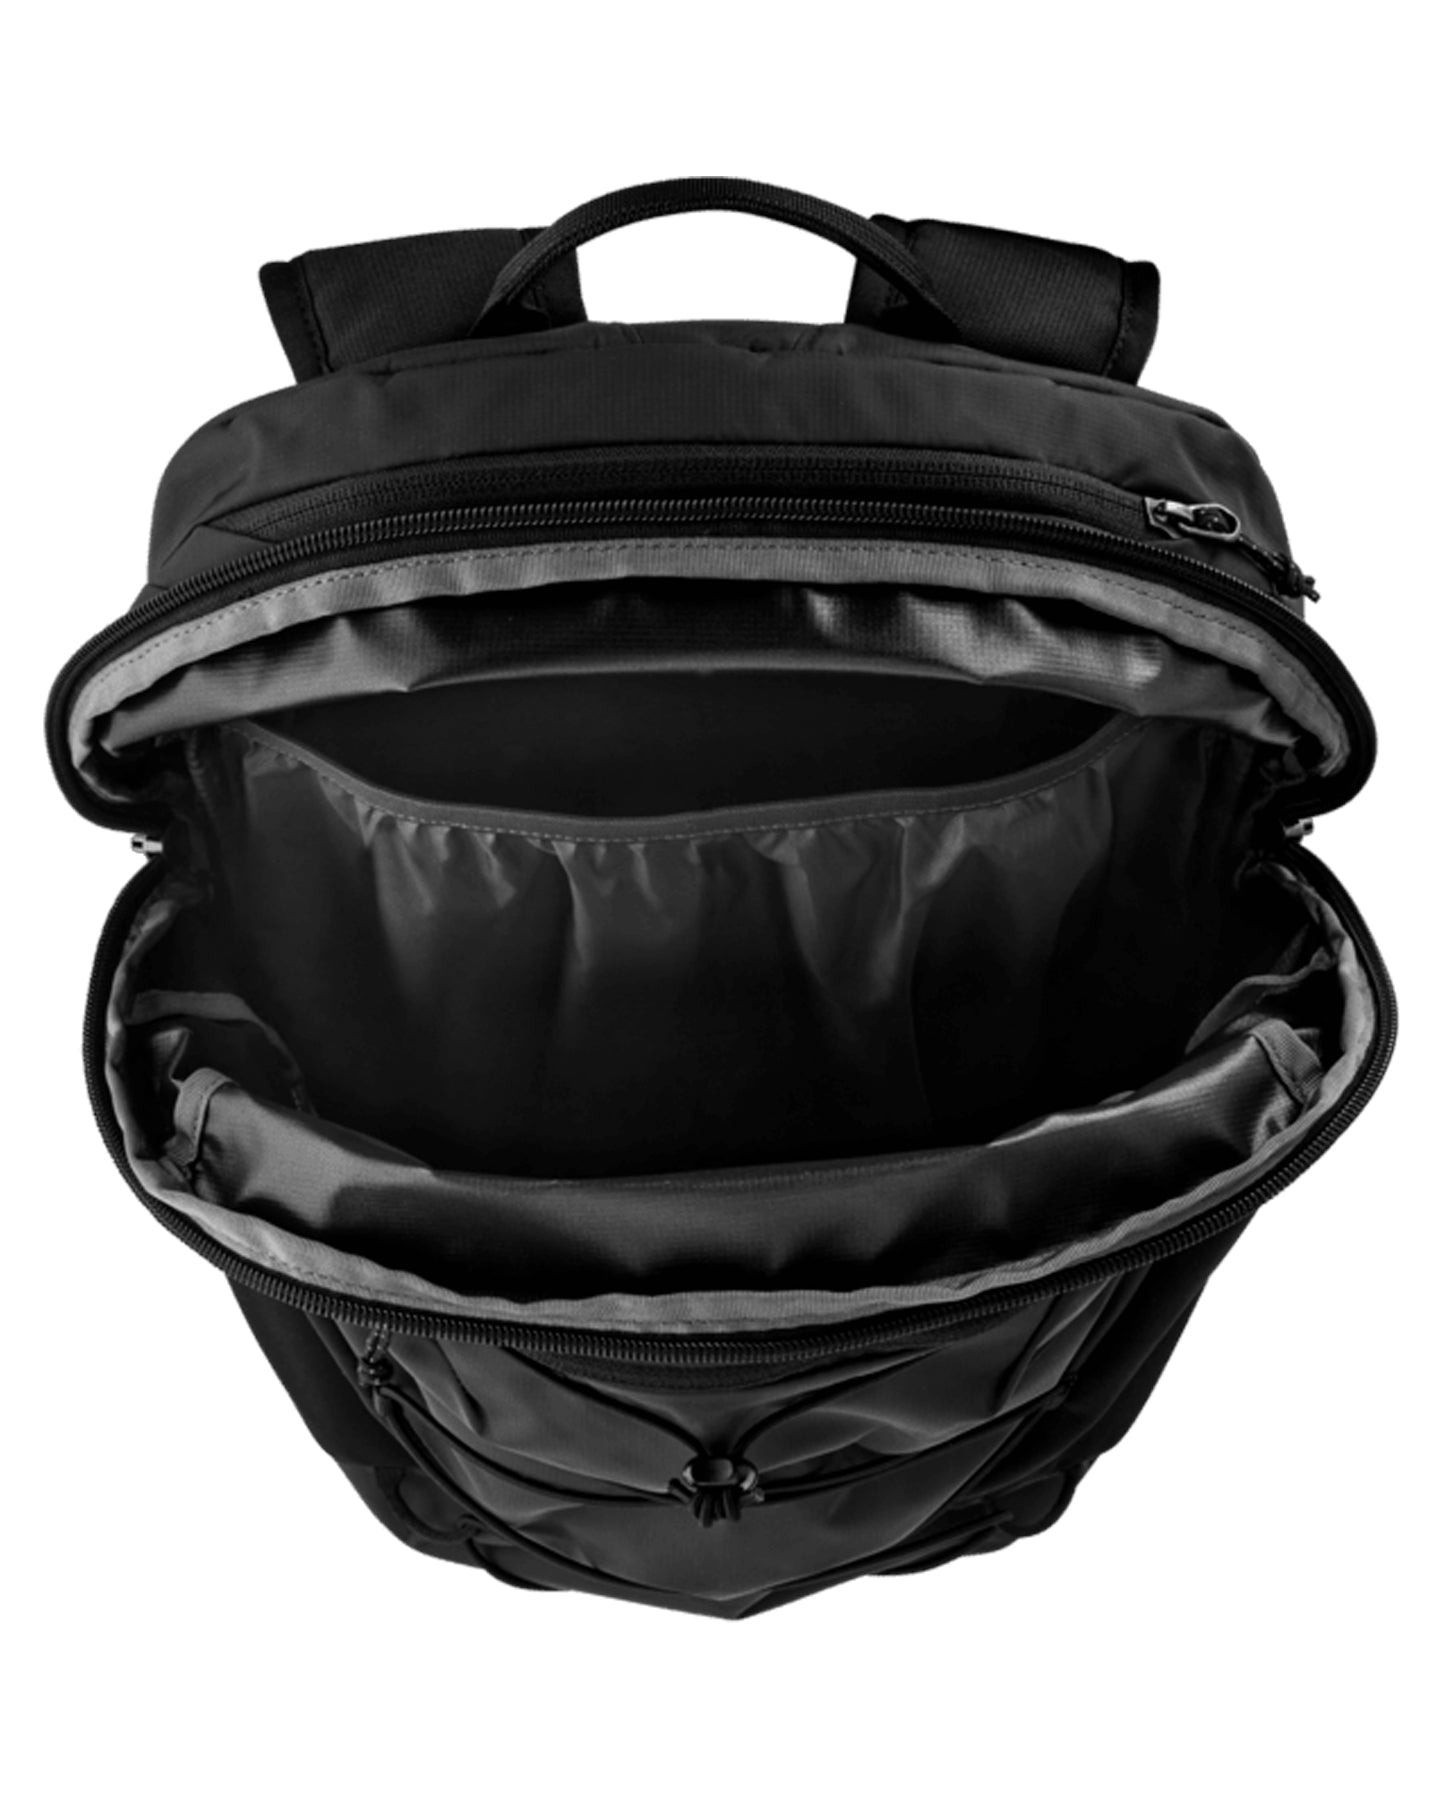 Patagonia Altvia Pack 22L - Black Backpacks - Trojan Wake Ski Snow